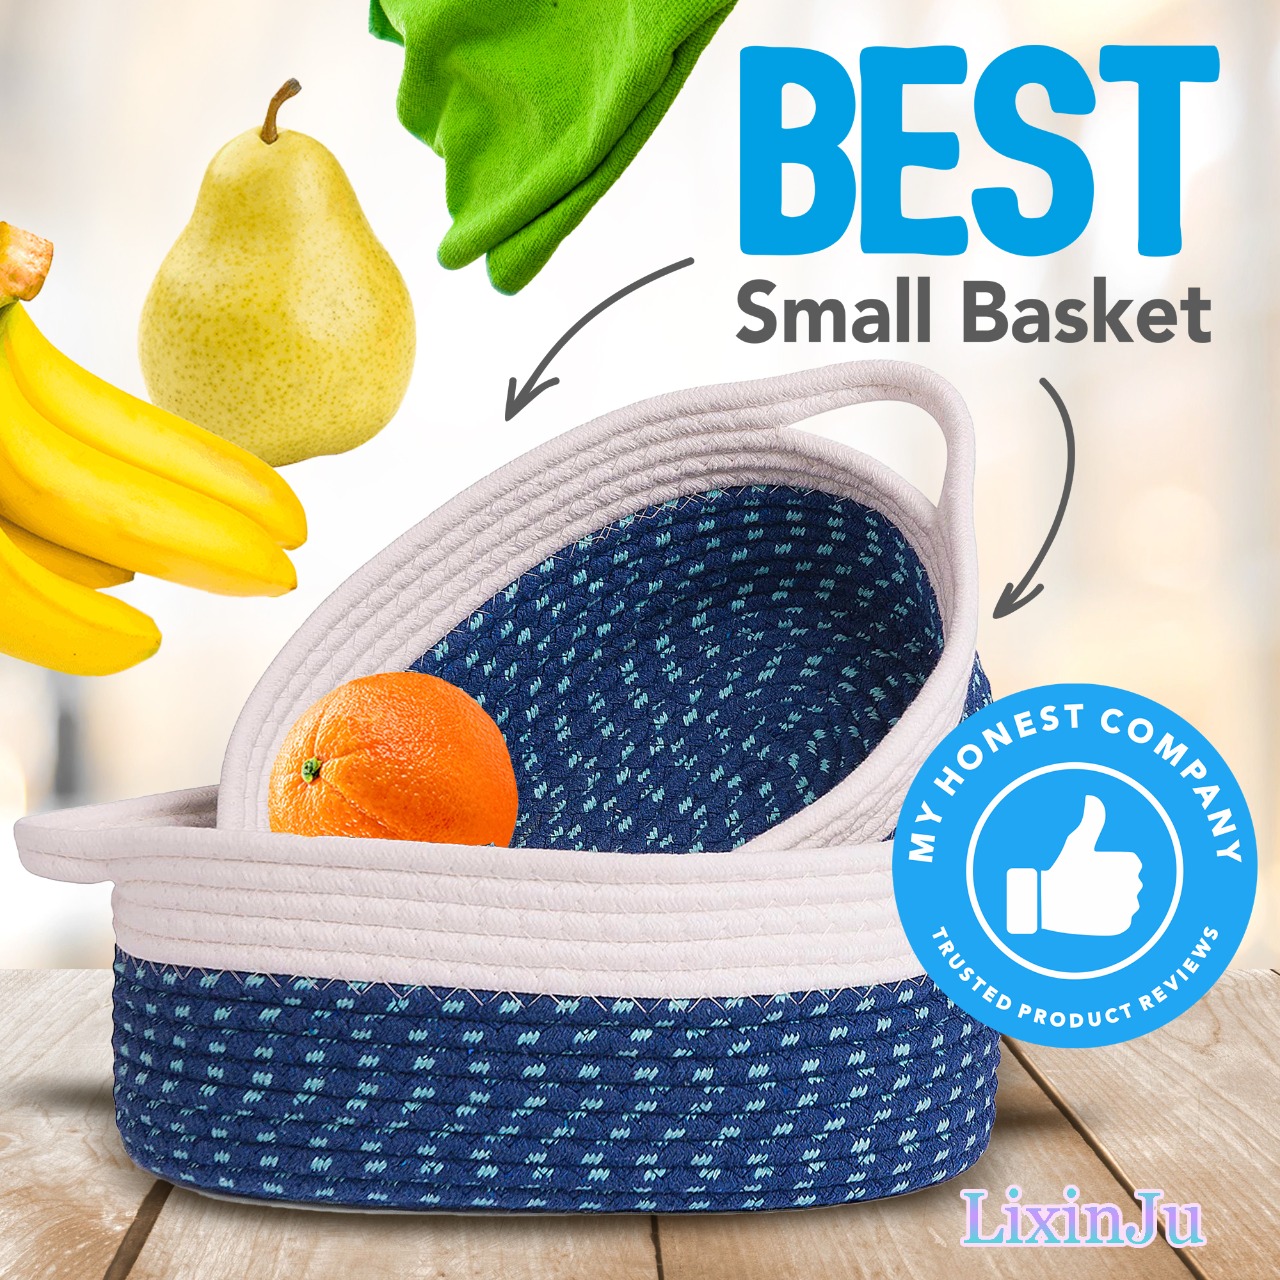 Best Basket For Organization